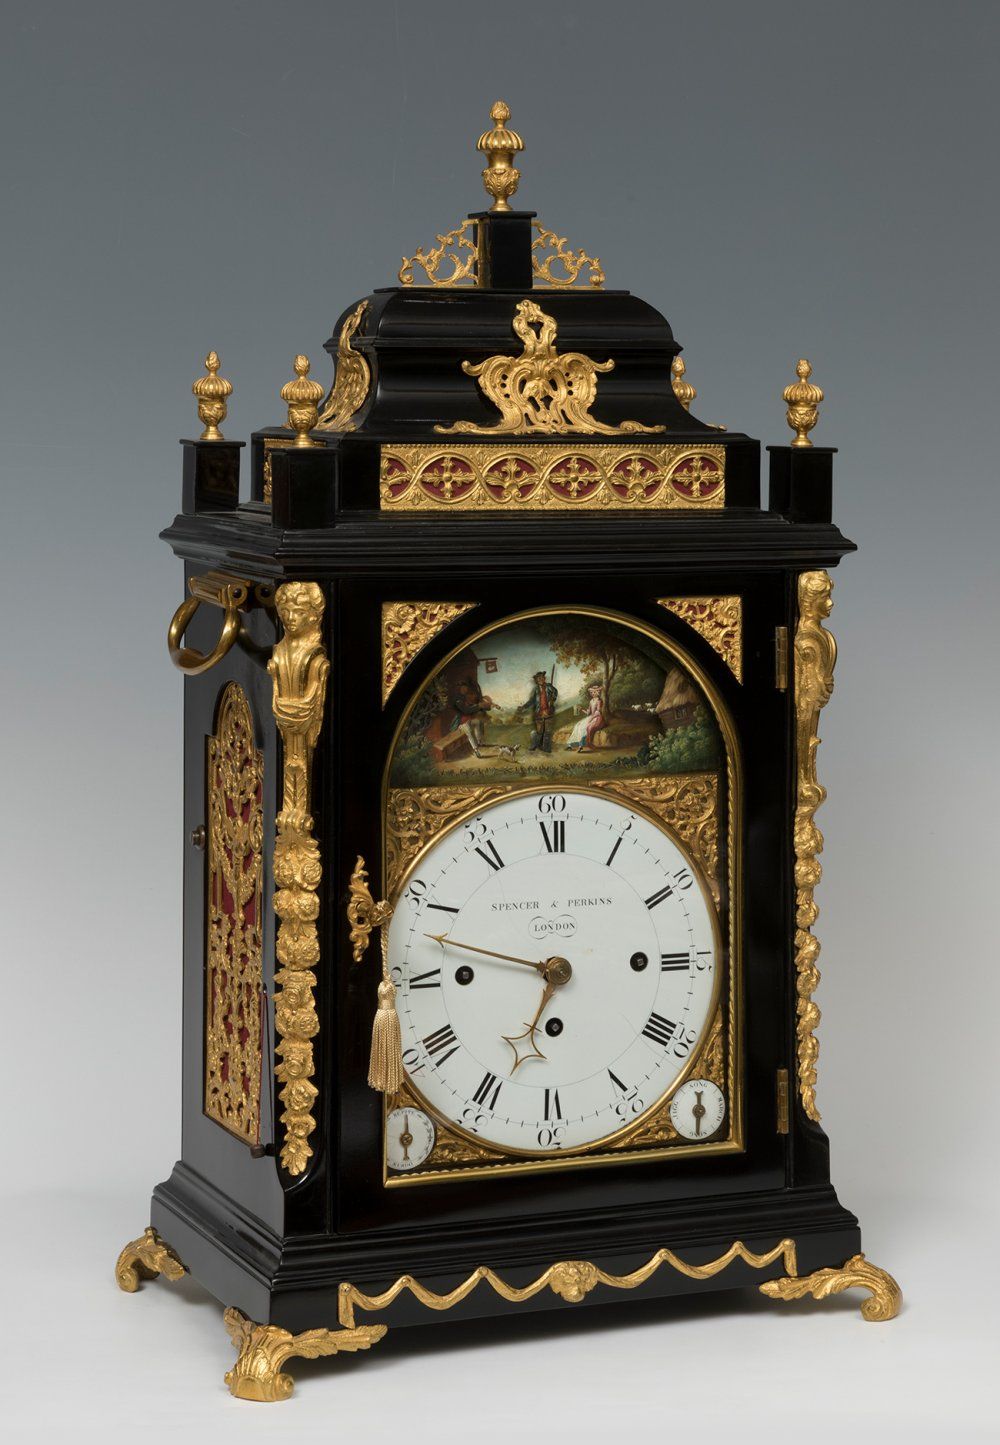 Null 重要的SPENCER & PERKINS支架壁炉钟。伦敦，约1750年。
漆木和鎏金铜器。
有音乐自动装置。
有9个钟的报时和移动的数字。
尺寸：67&hellip;